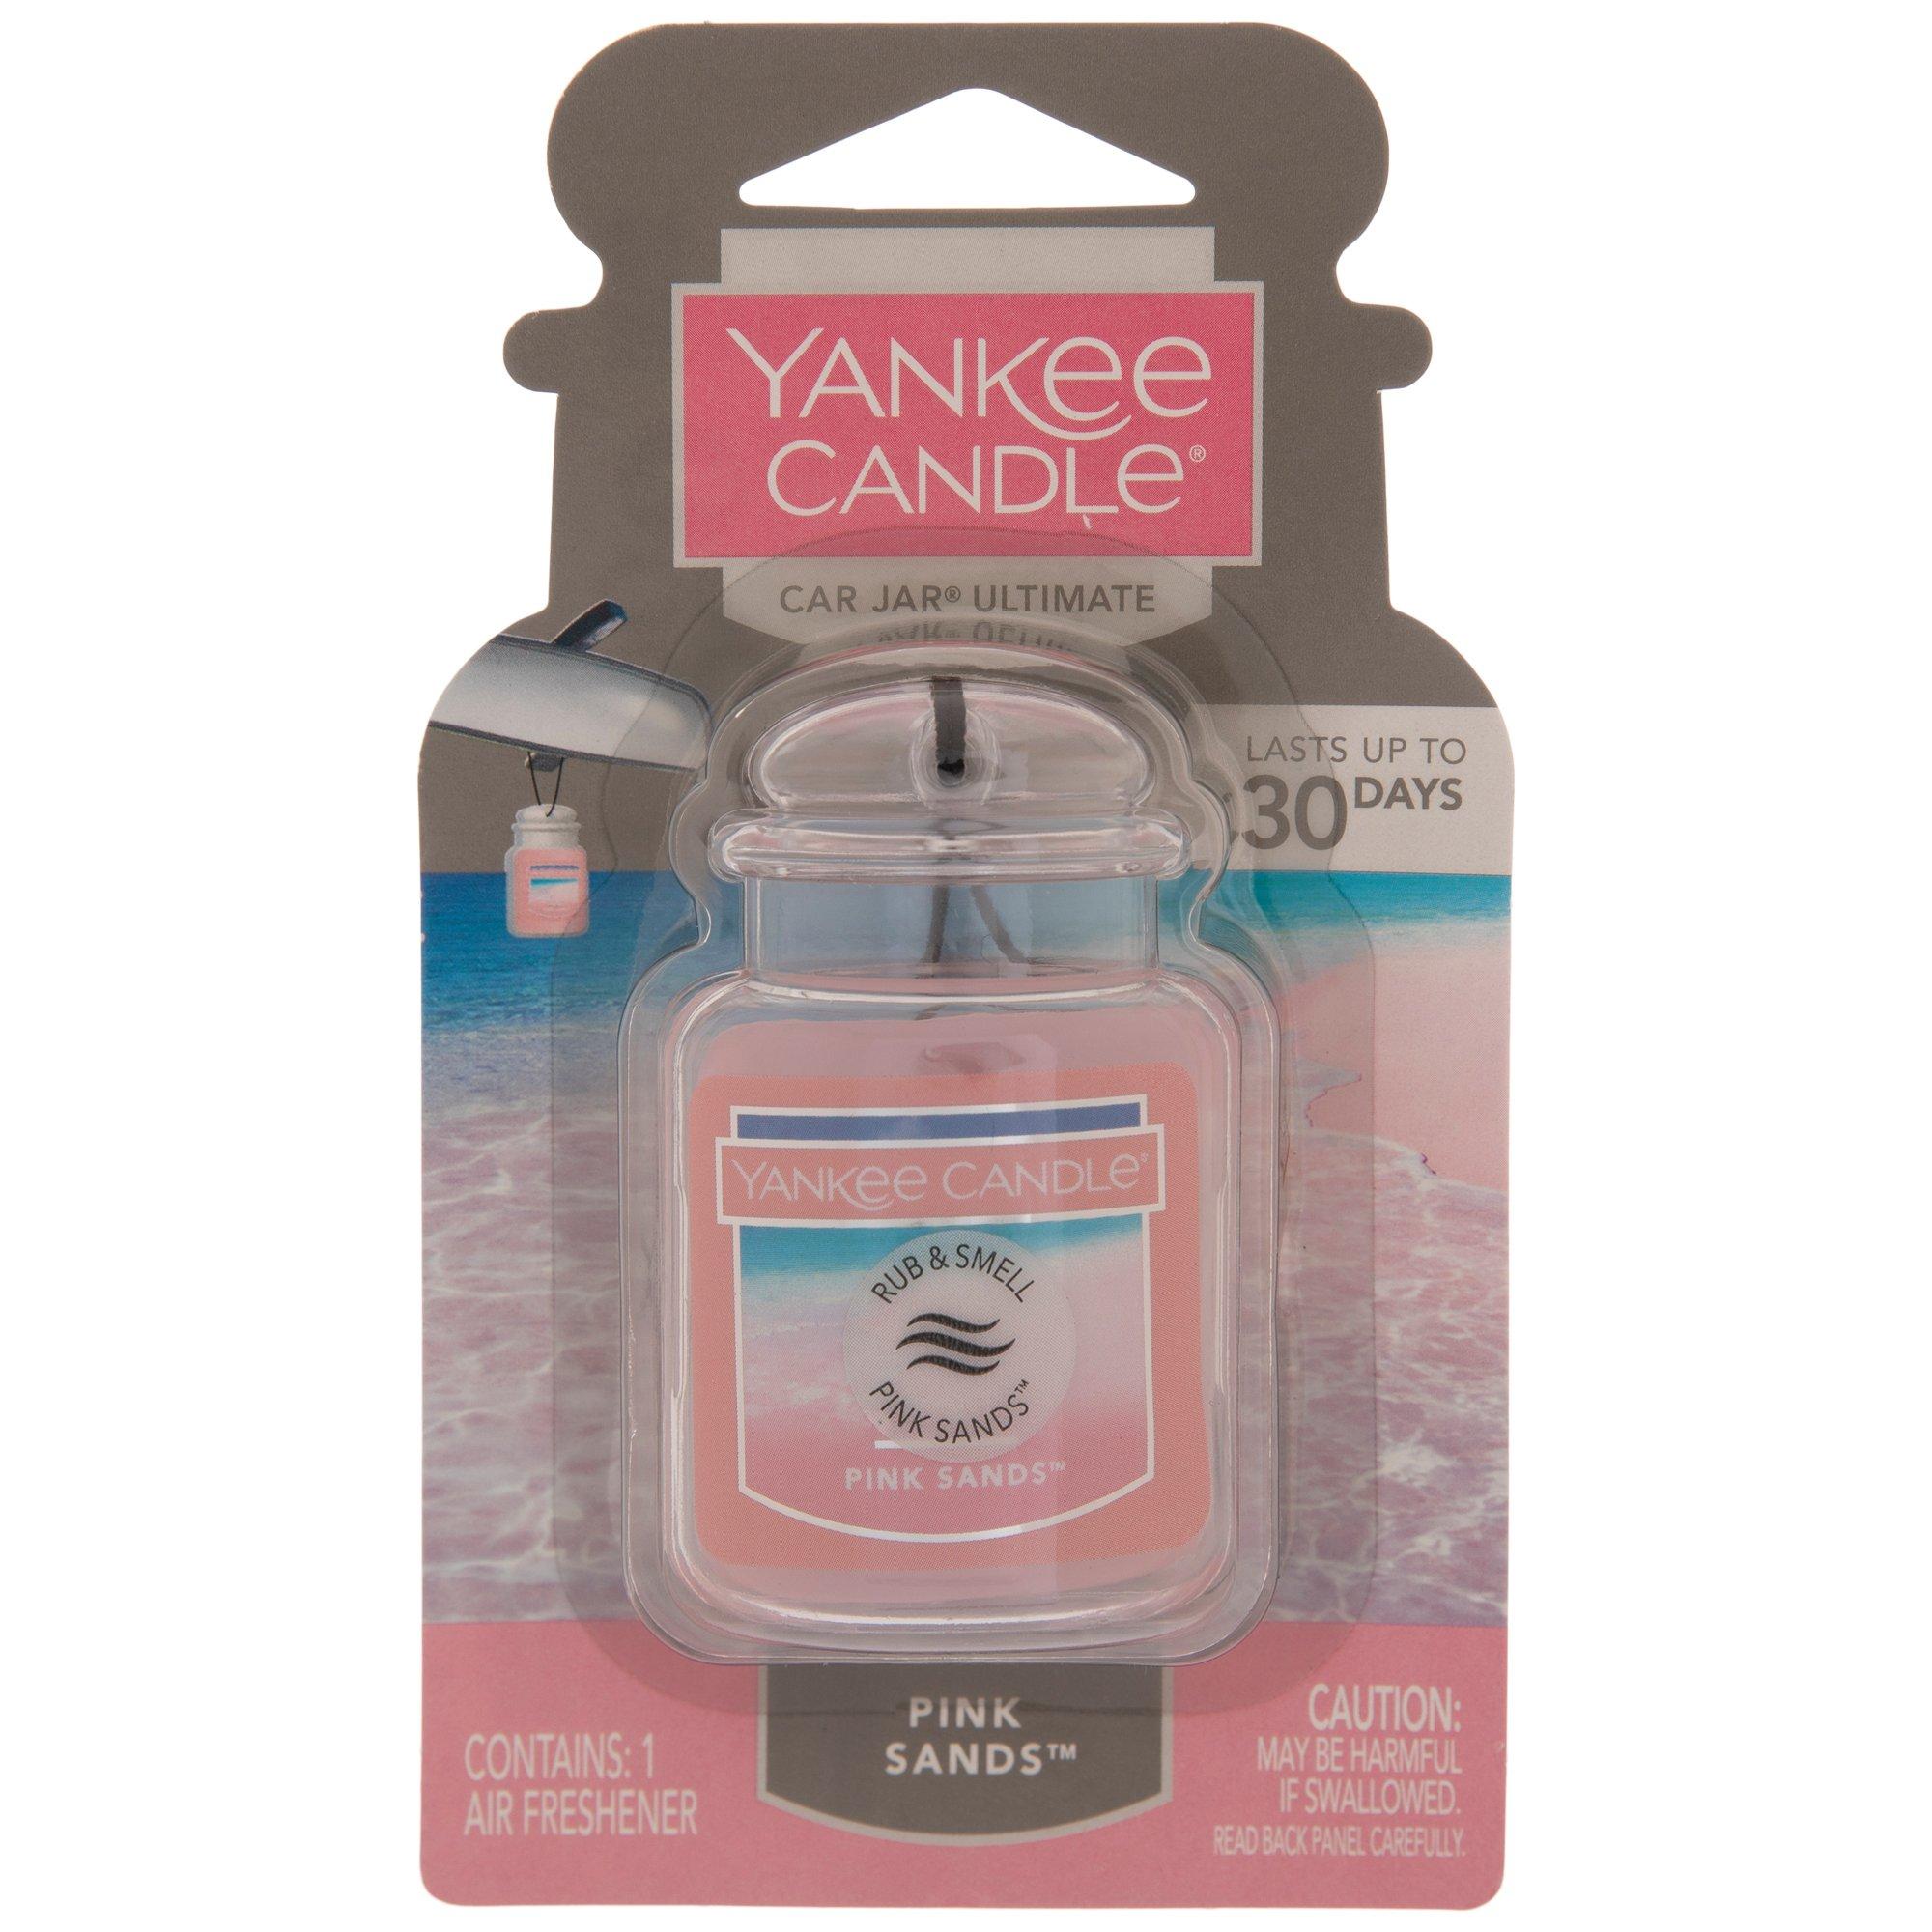 Yankee Candle Car Jar Air Freshener, Pink Sands, 3 Pack - 3 air freshener